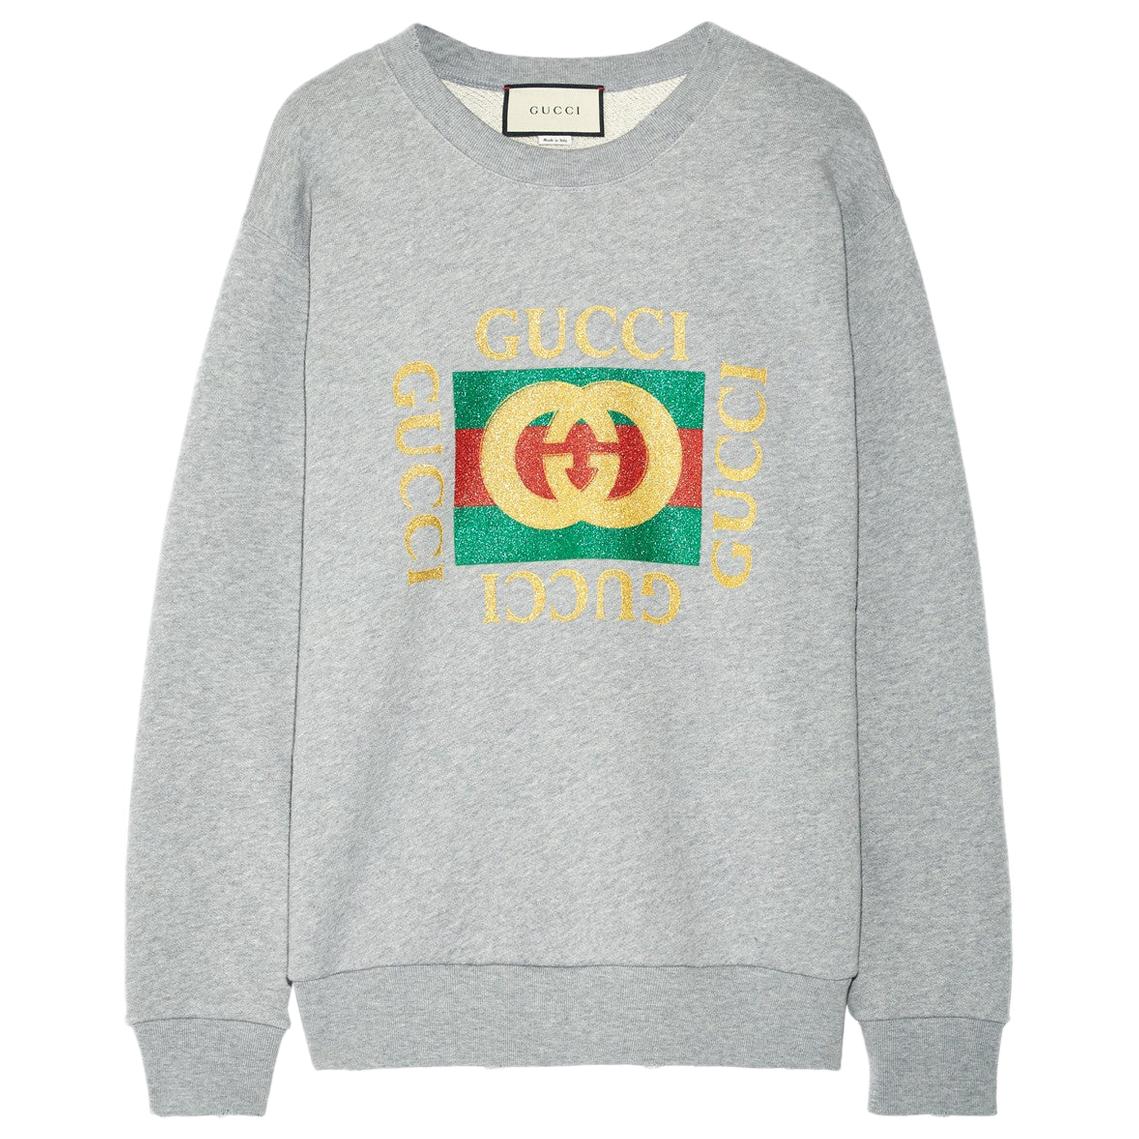 Gucci Oversized Appliquéd Printed Cotton-Terry Sweatshirt